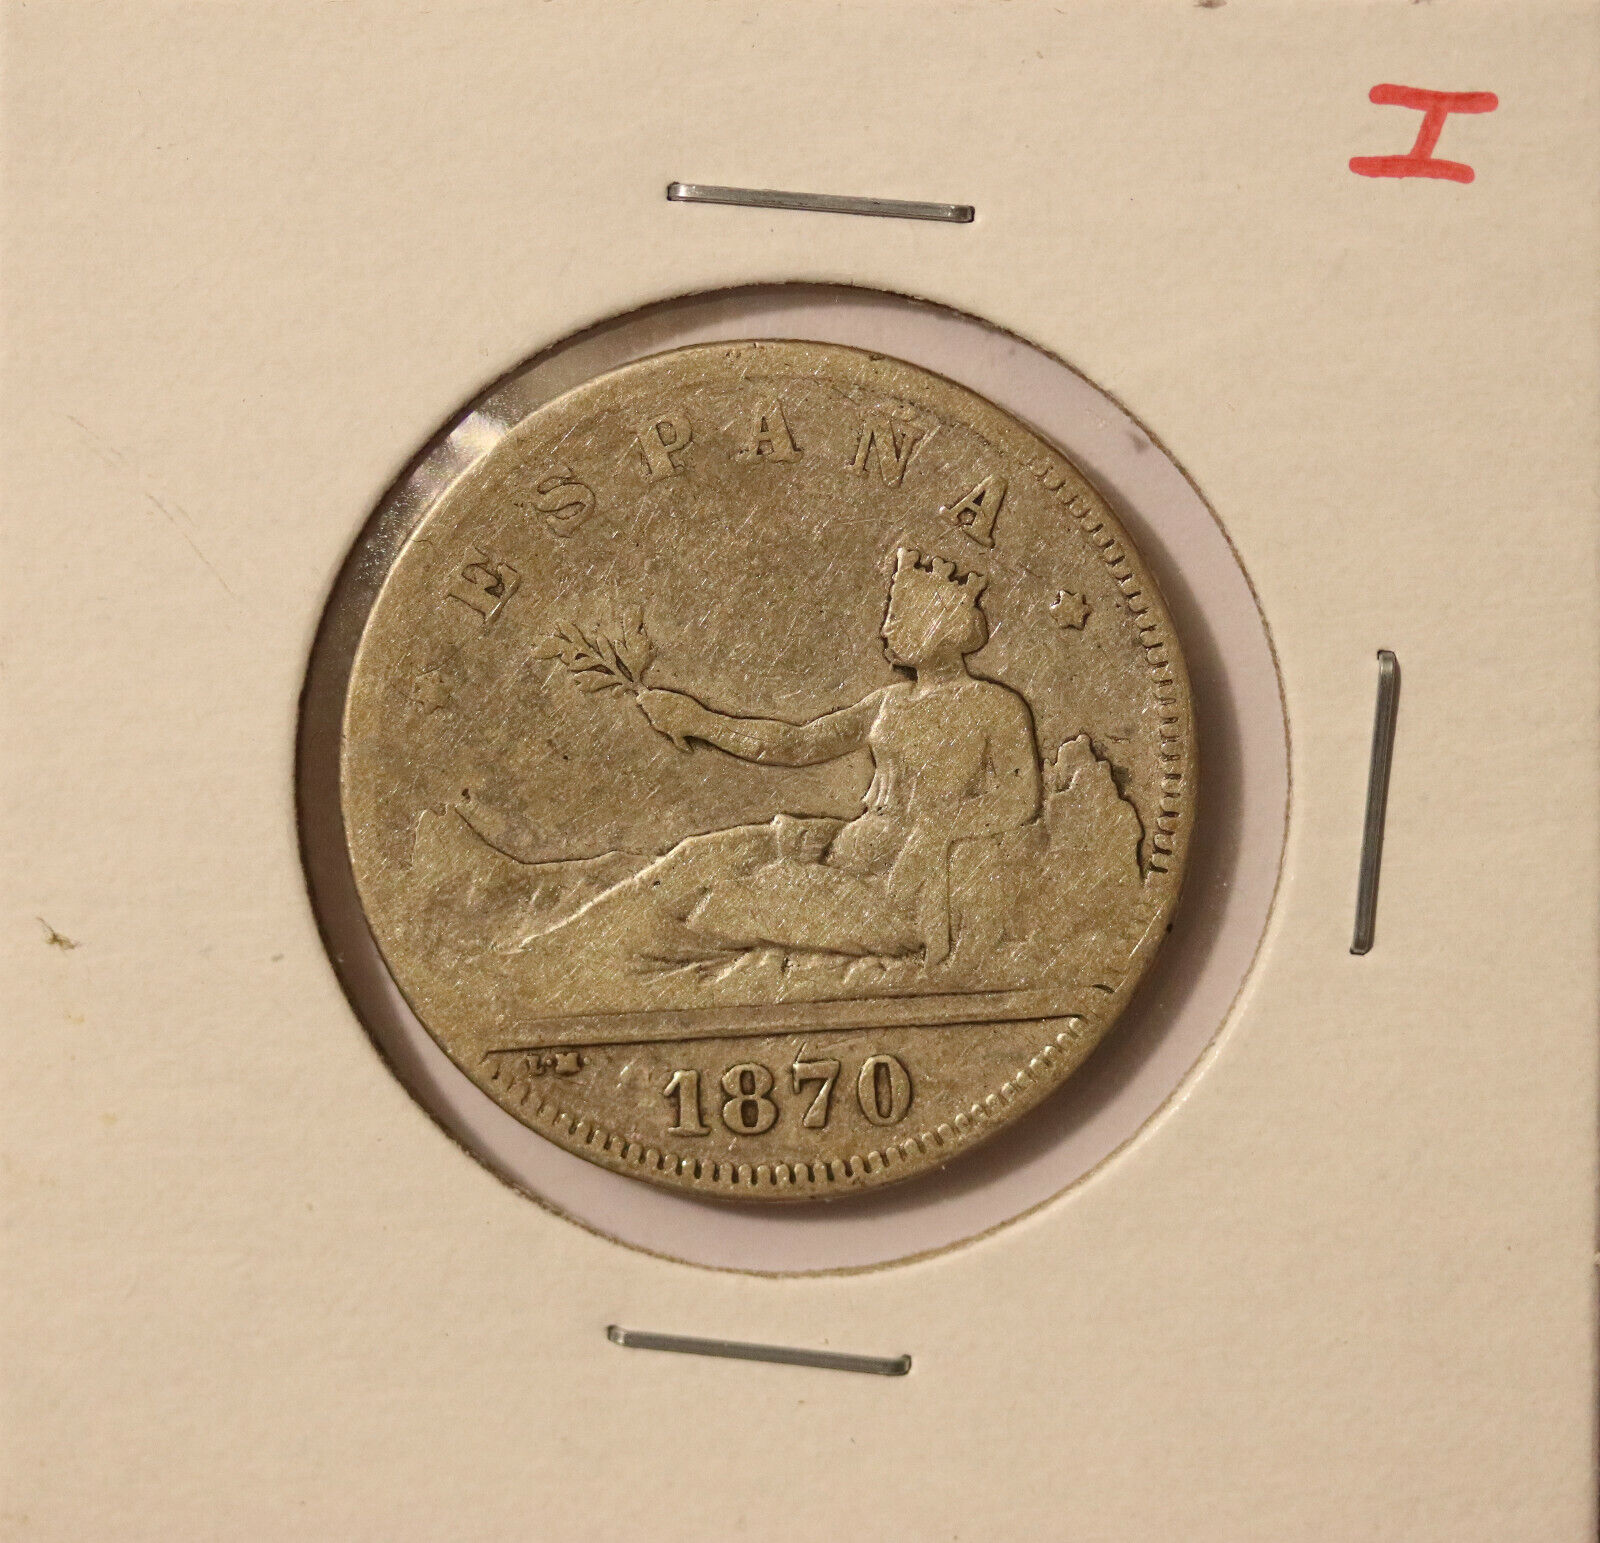 1870 2 Pesetas Spain - Km 654 - Silver #1 - Interesting Coin